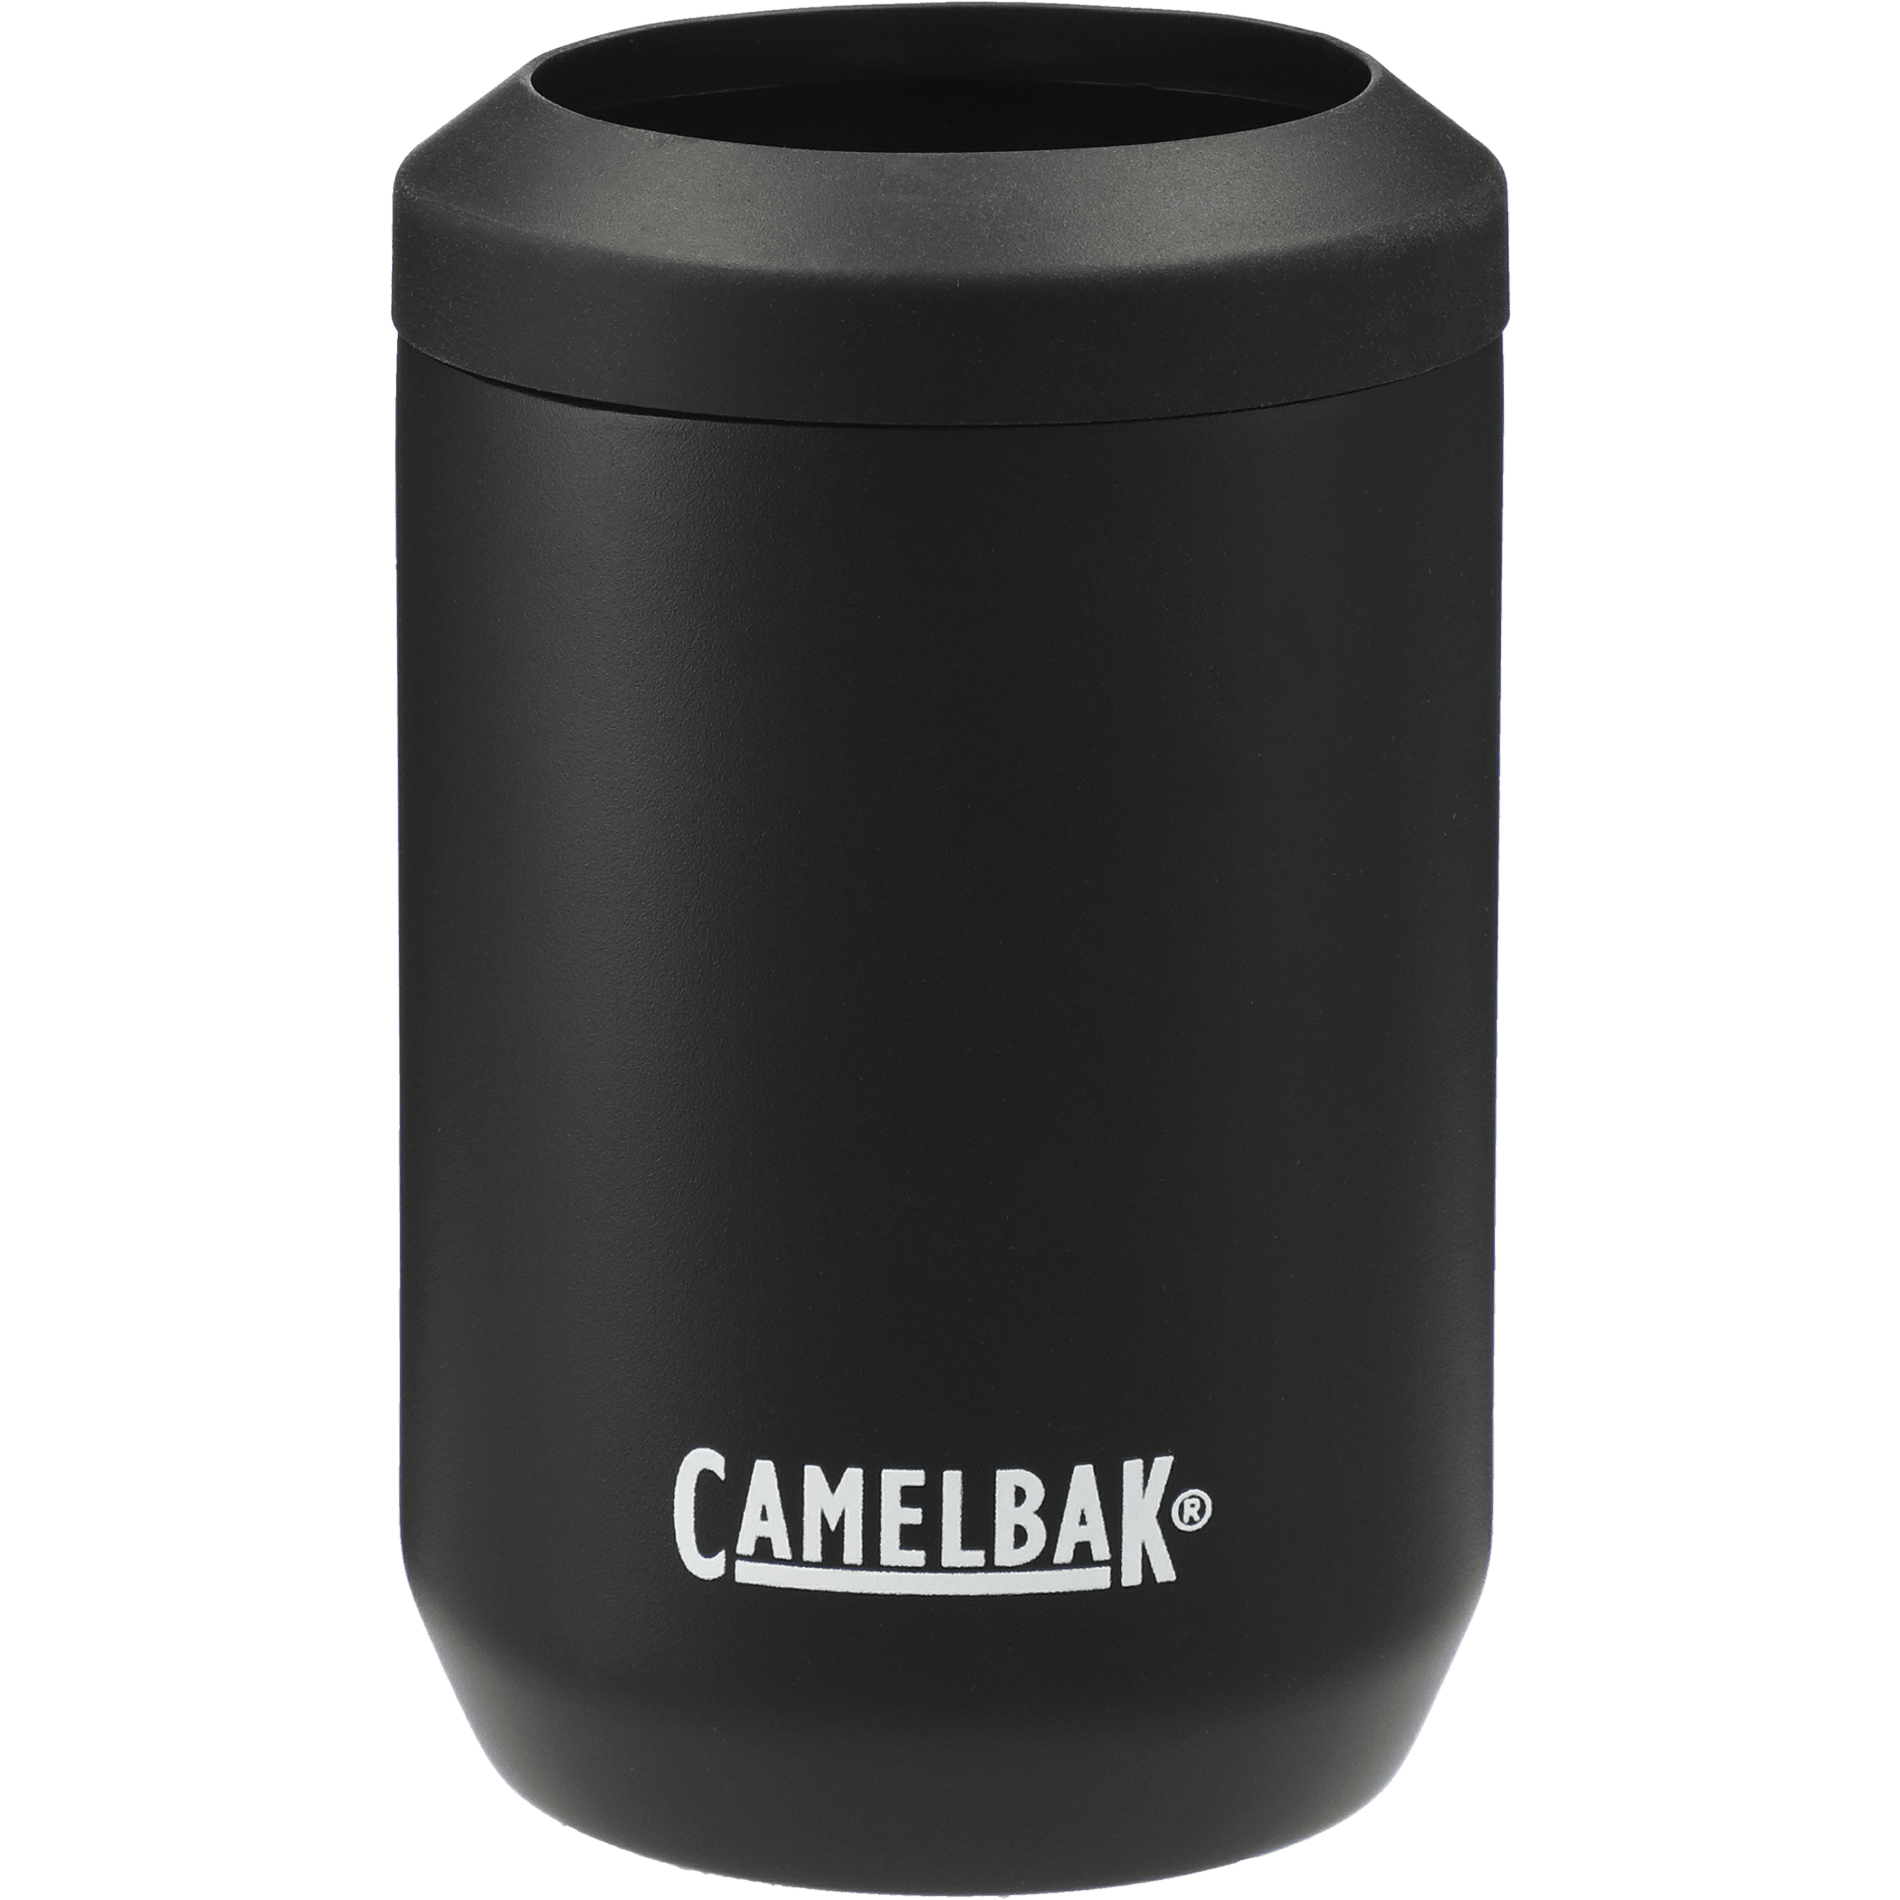 Camelbak Travel Mug